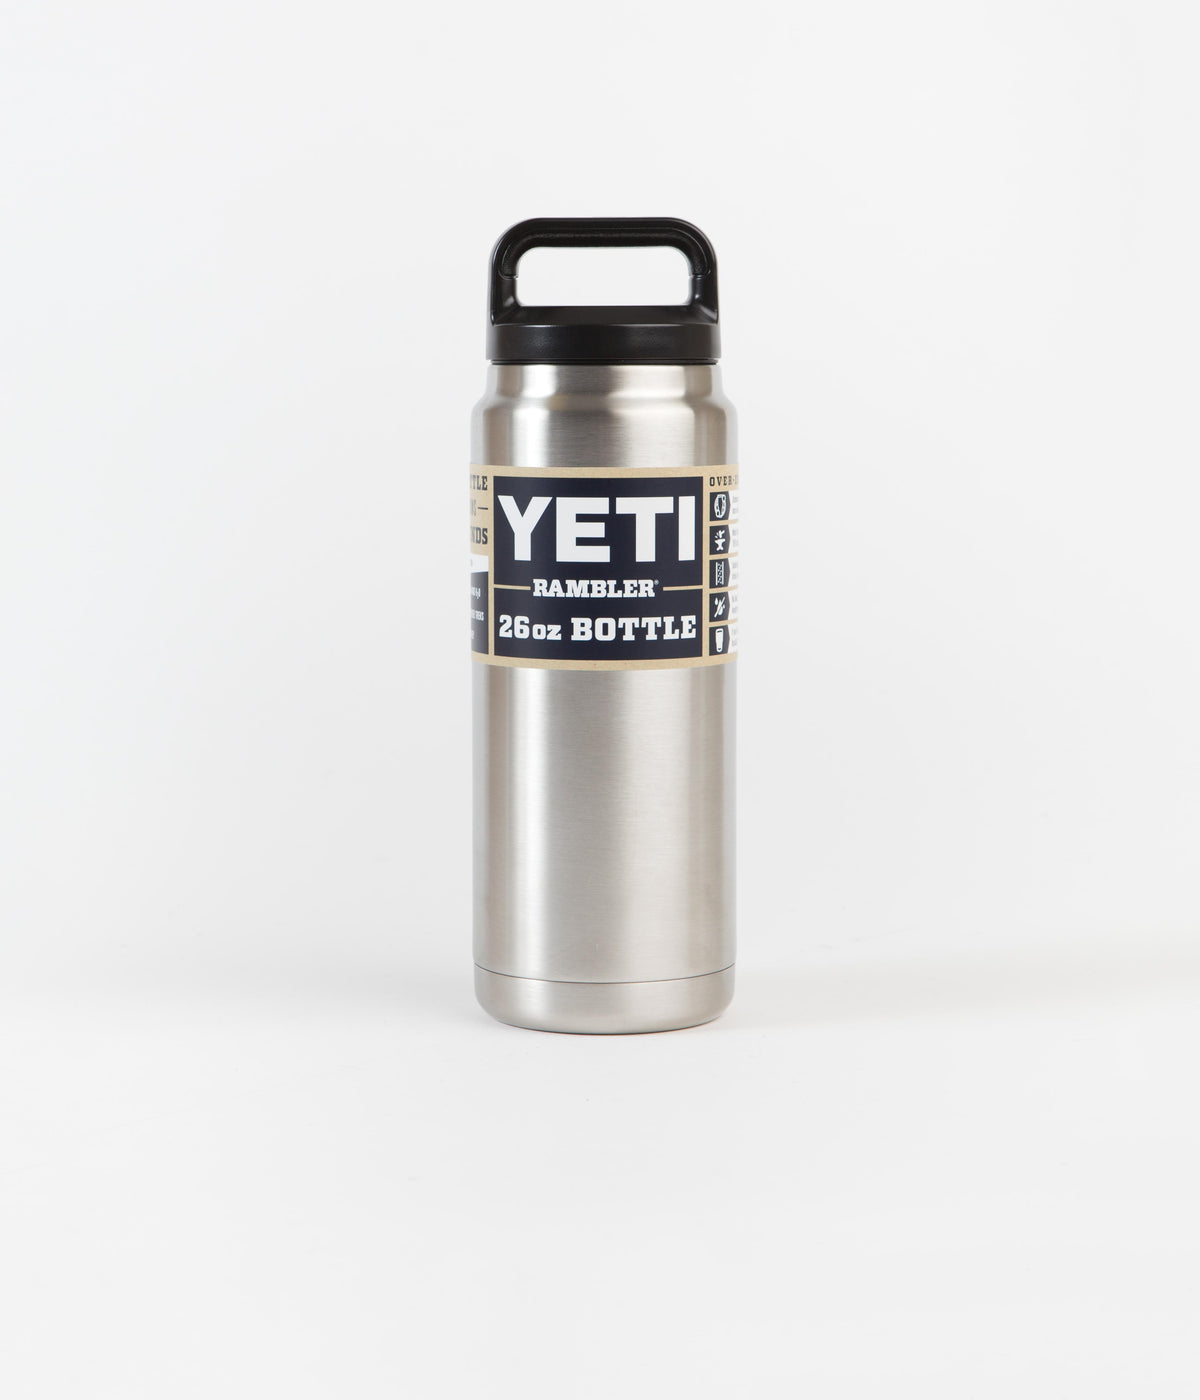 Yeti Rambler Bottle 26oz - Stainless Steel